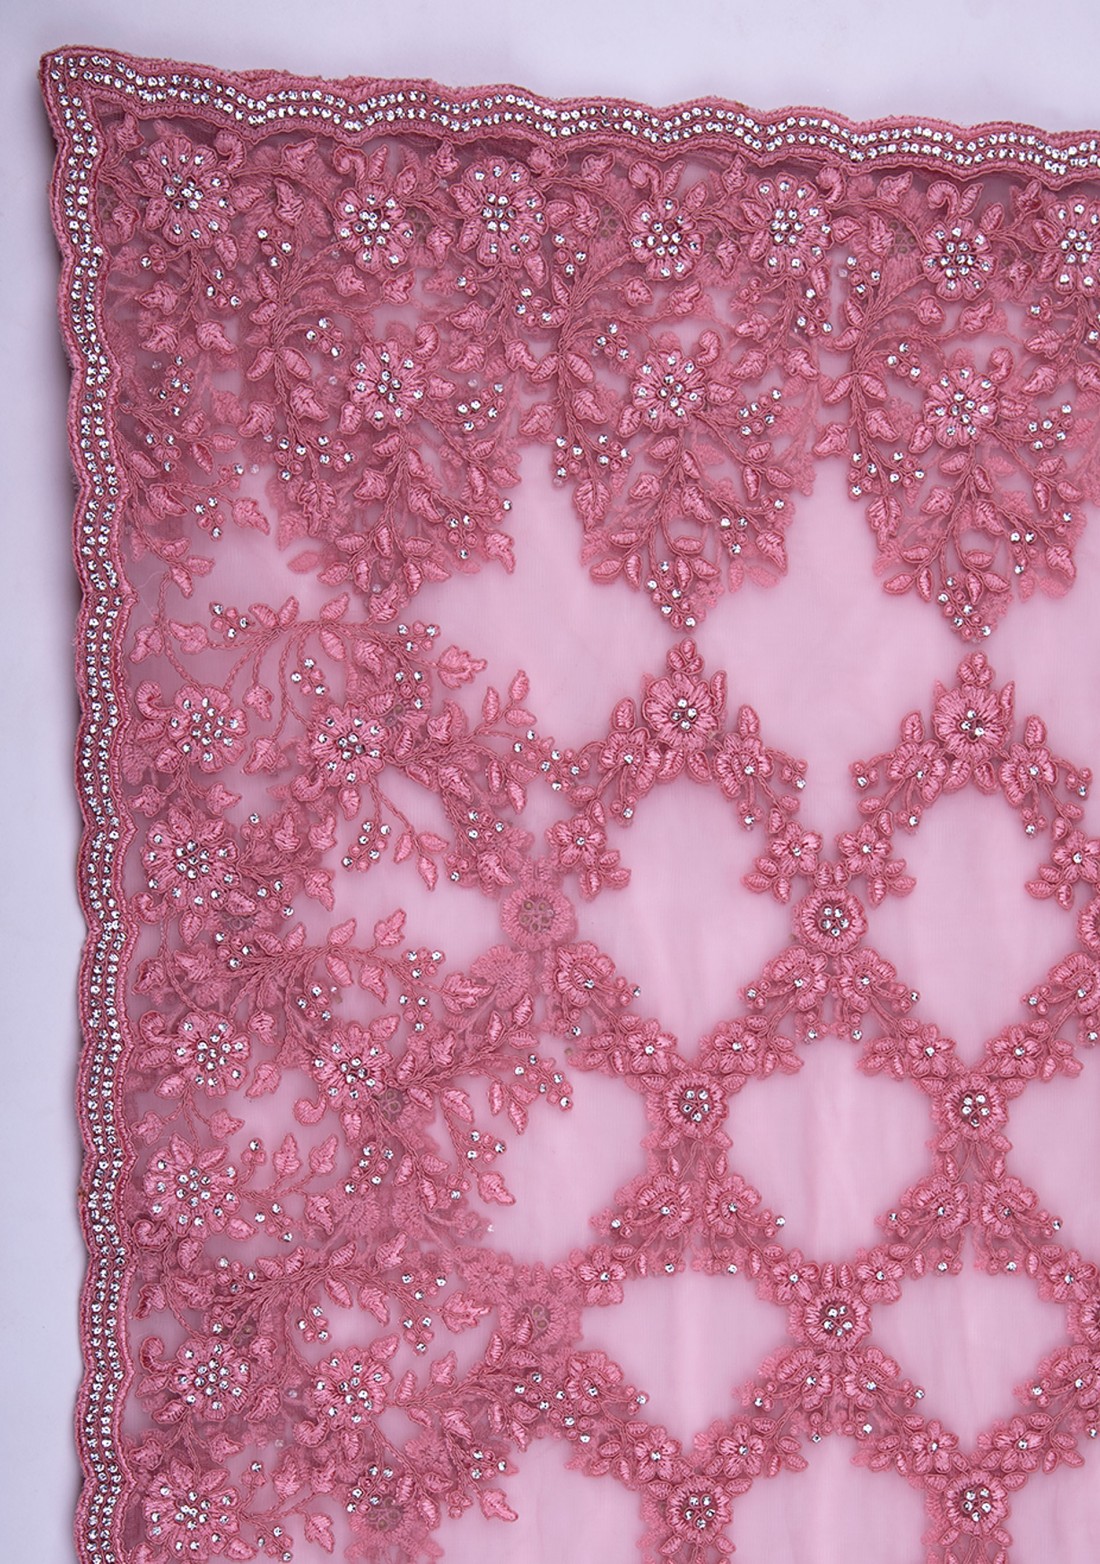 Pastel Pink Embroidered Net Saree